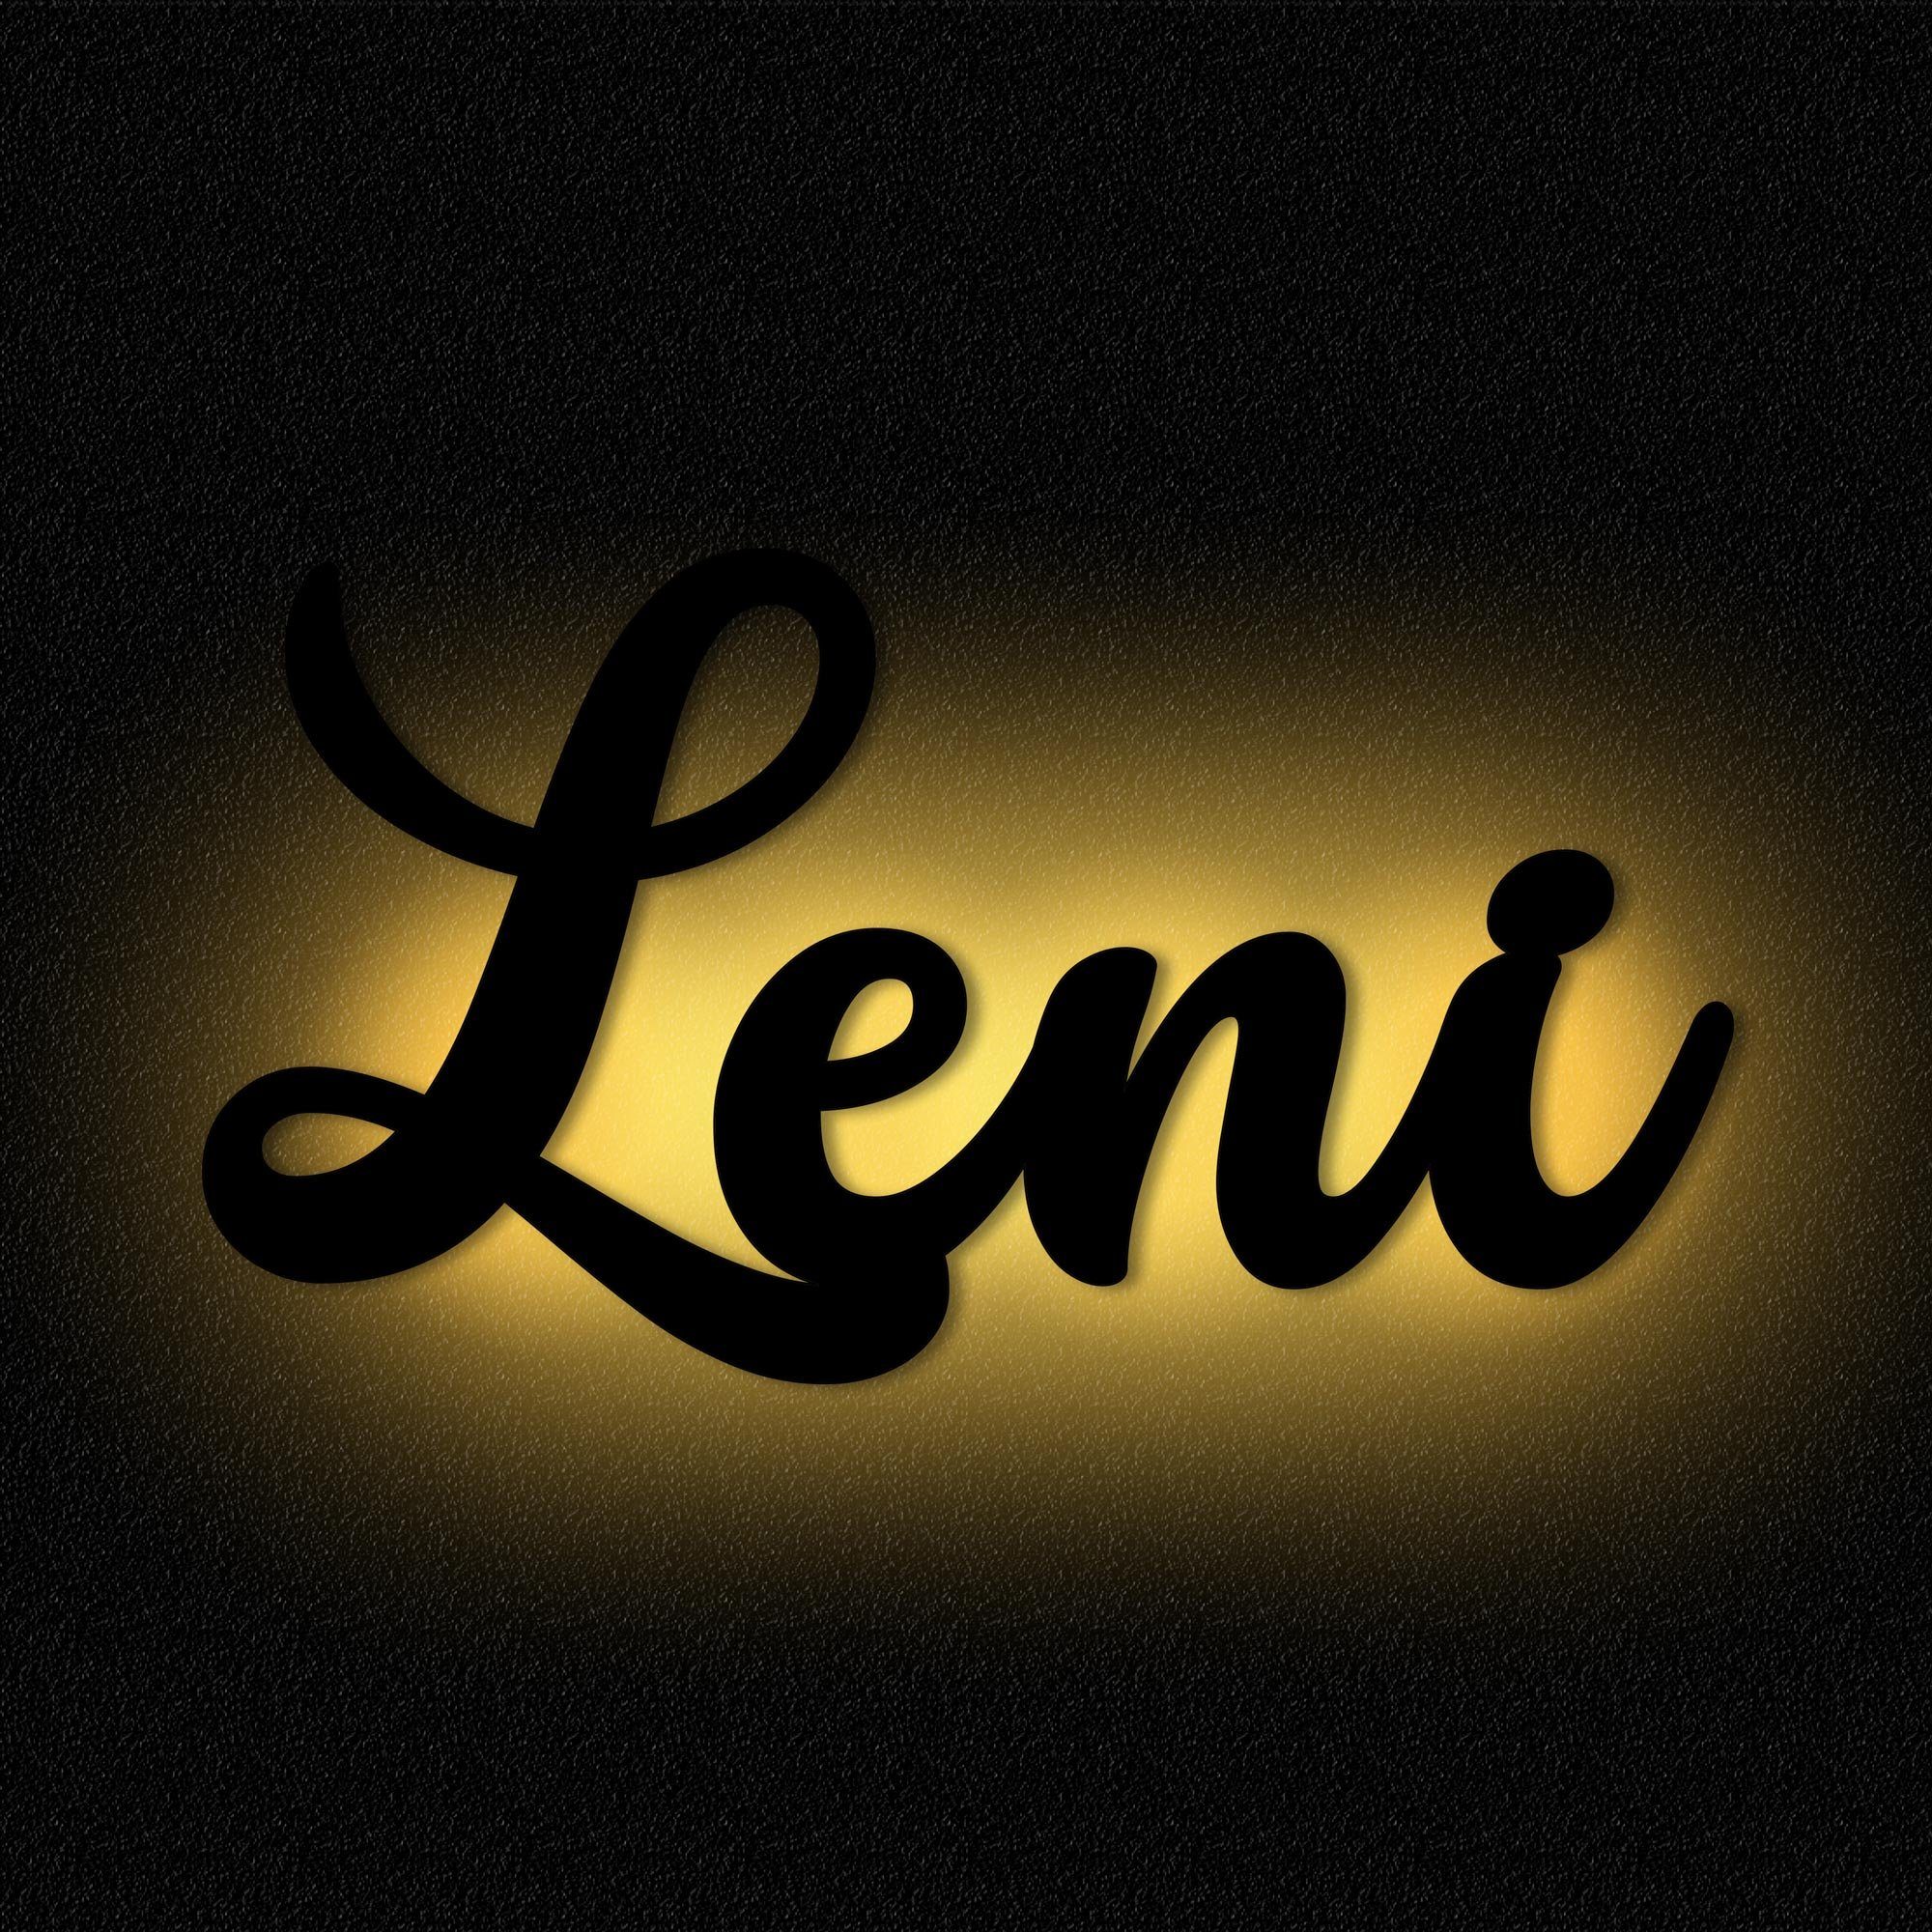 Namofactur LED Dekolicht Name Leni Deko Licht Kinder & Erwachsene Wandlampe I MDF Holz, LED fest integriert, Warmweiß